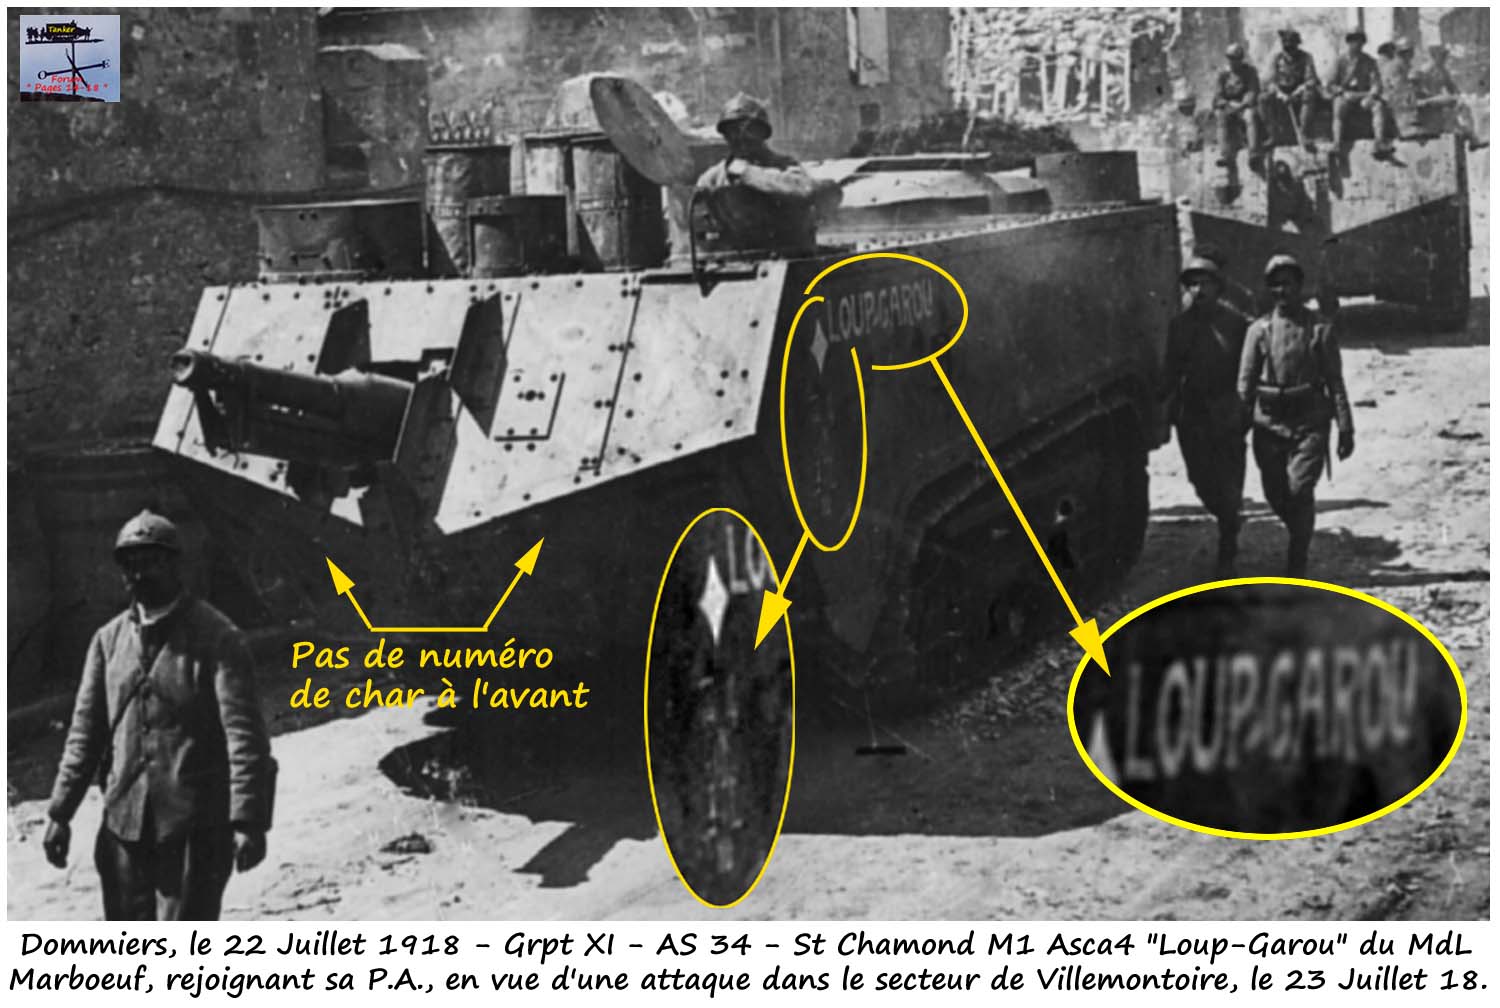 Grpt XI - AS 34 - St Chamond M1 AsCa4 n° 62523 - Loup-Garou (01)-min.jpg